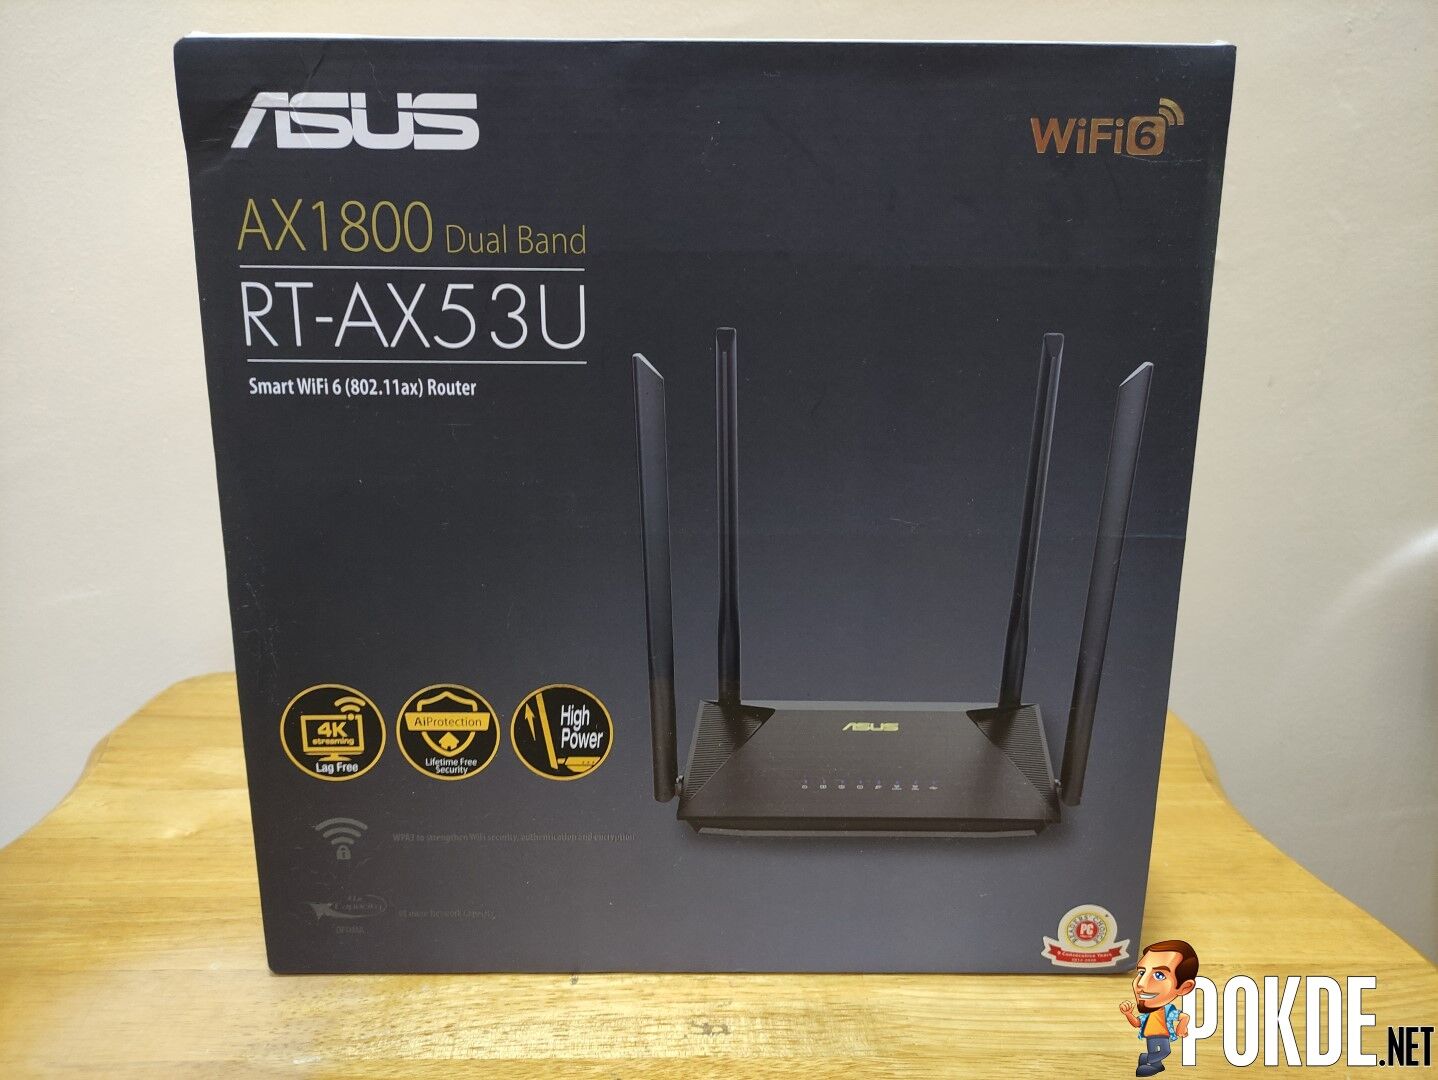 ASUS RT-AX53U AX1800 Dual Band Router Review 34